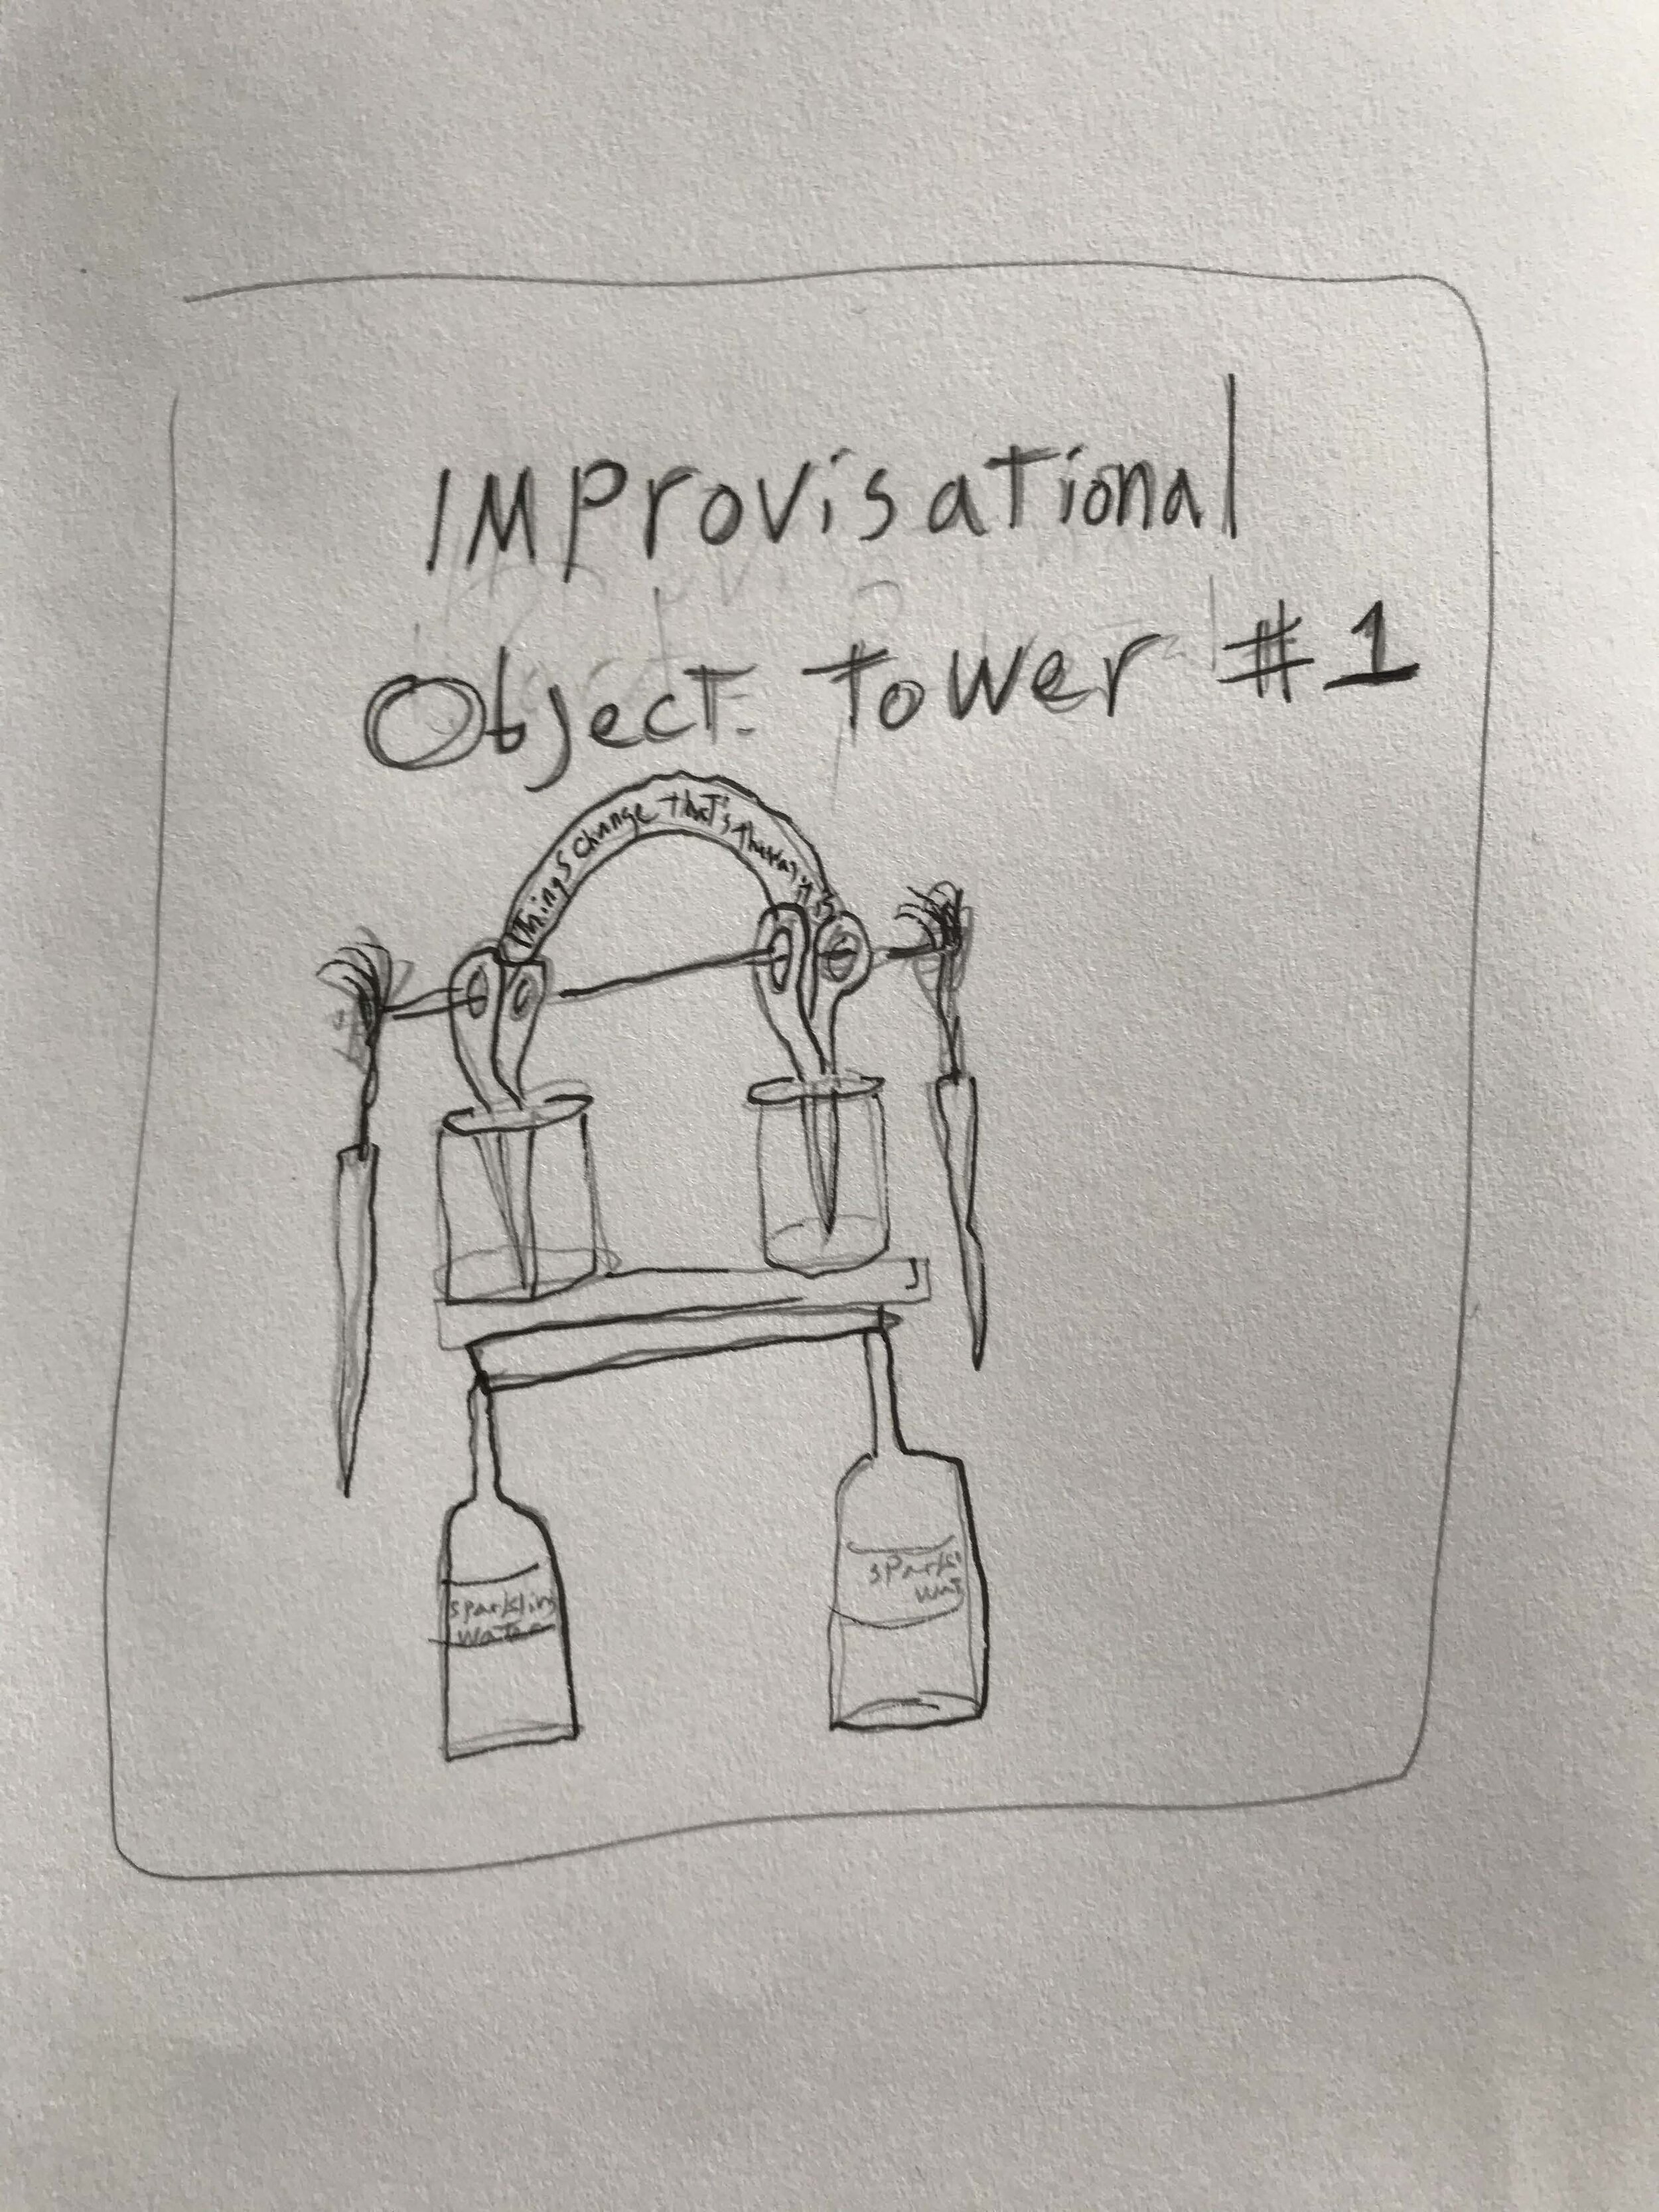 Improvisational_tower_1_Page_1.jpg